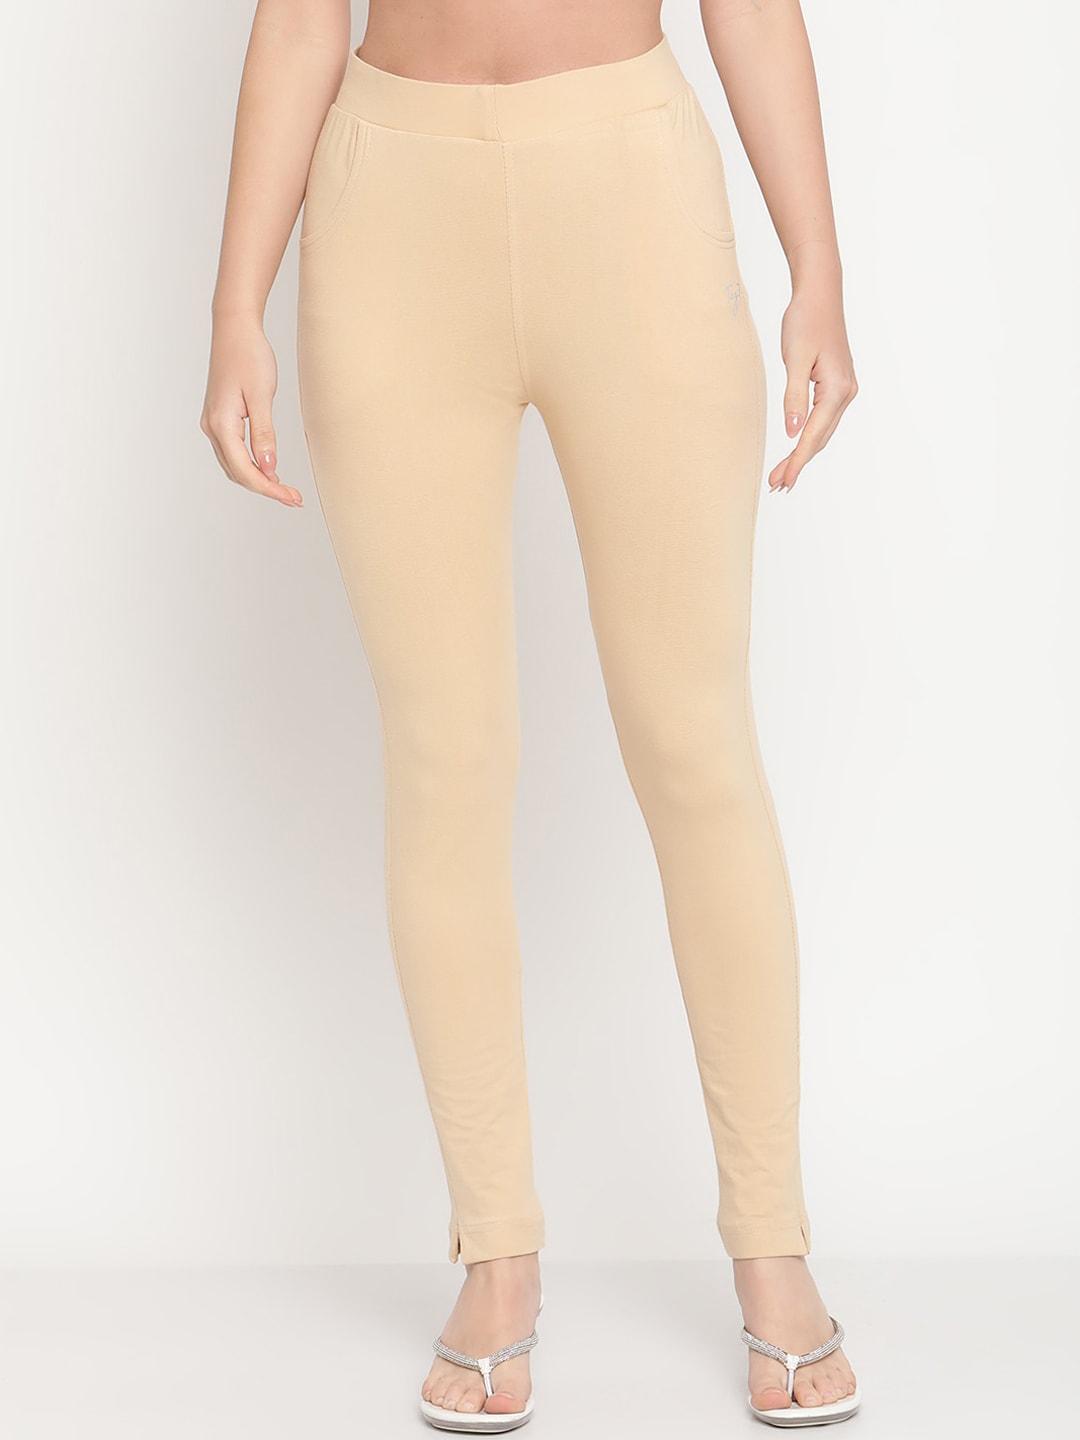 tag-7-women-beige-solid-ankle-length-leggings